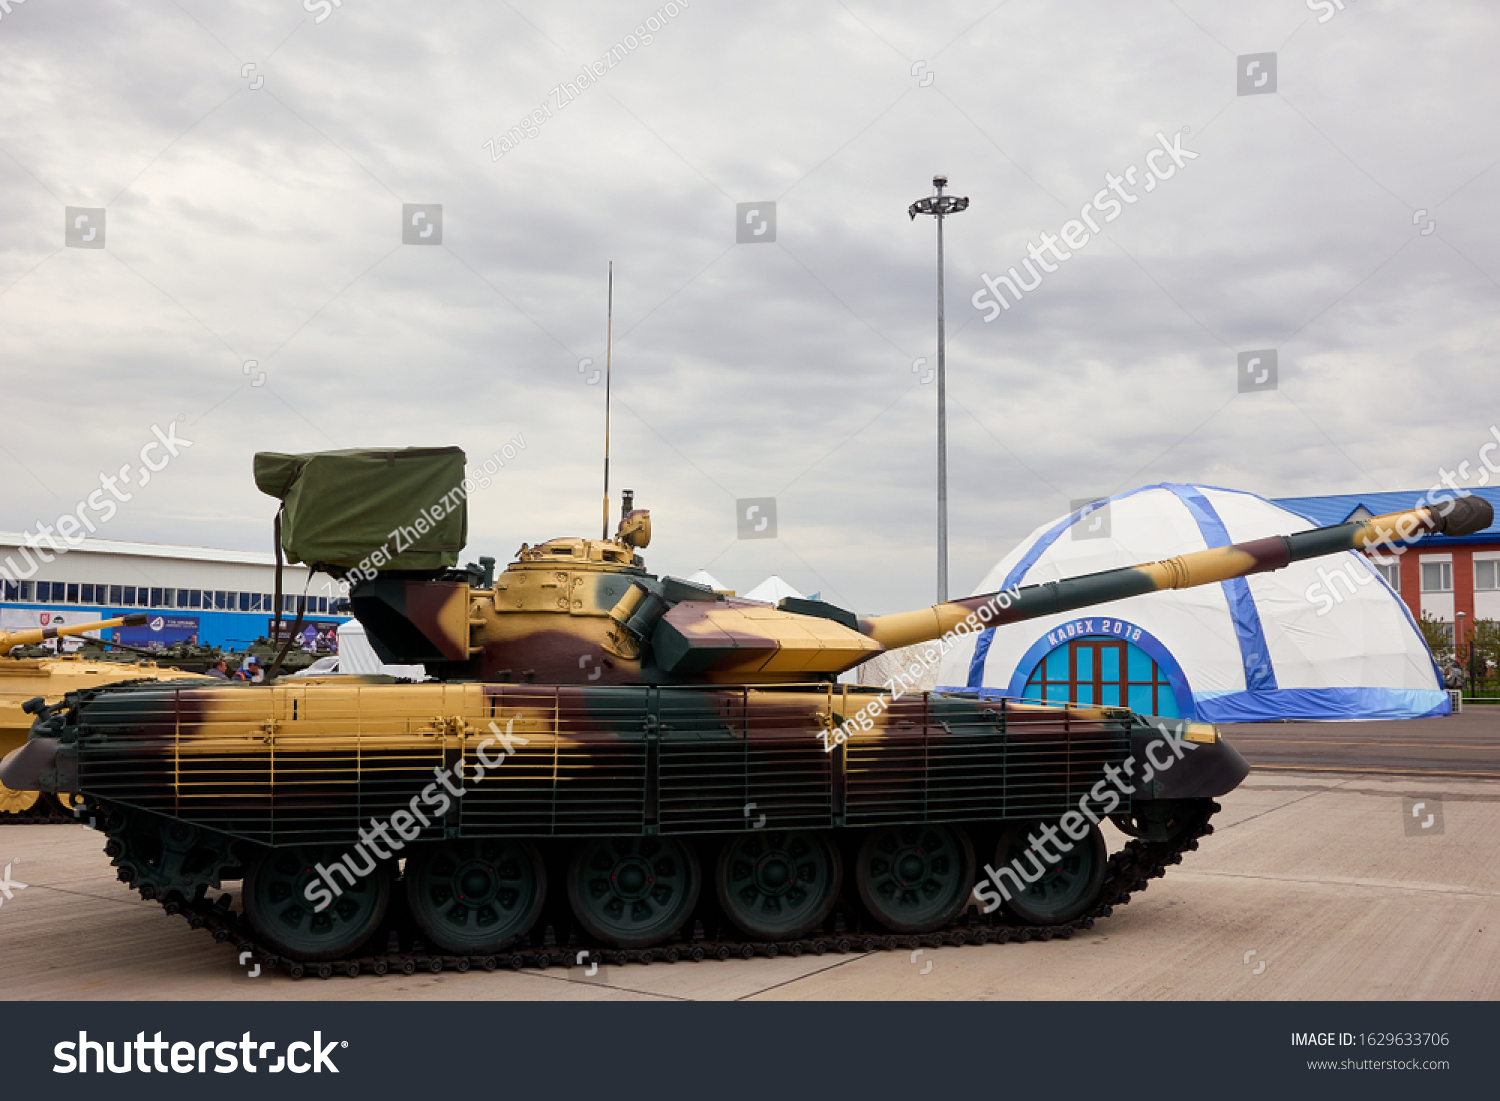 stock-photo-astana-kazakhstan-may-t-kae-mbt-upgrade-package-solution-for-kazakhstan-armed-forces-1629633706.jpg